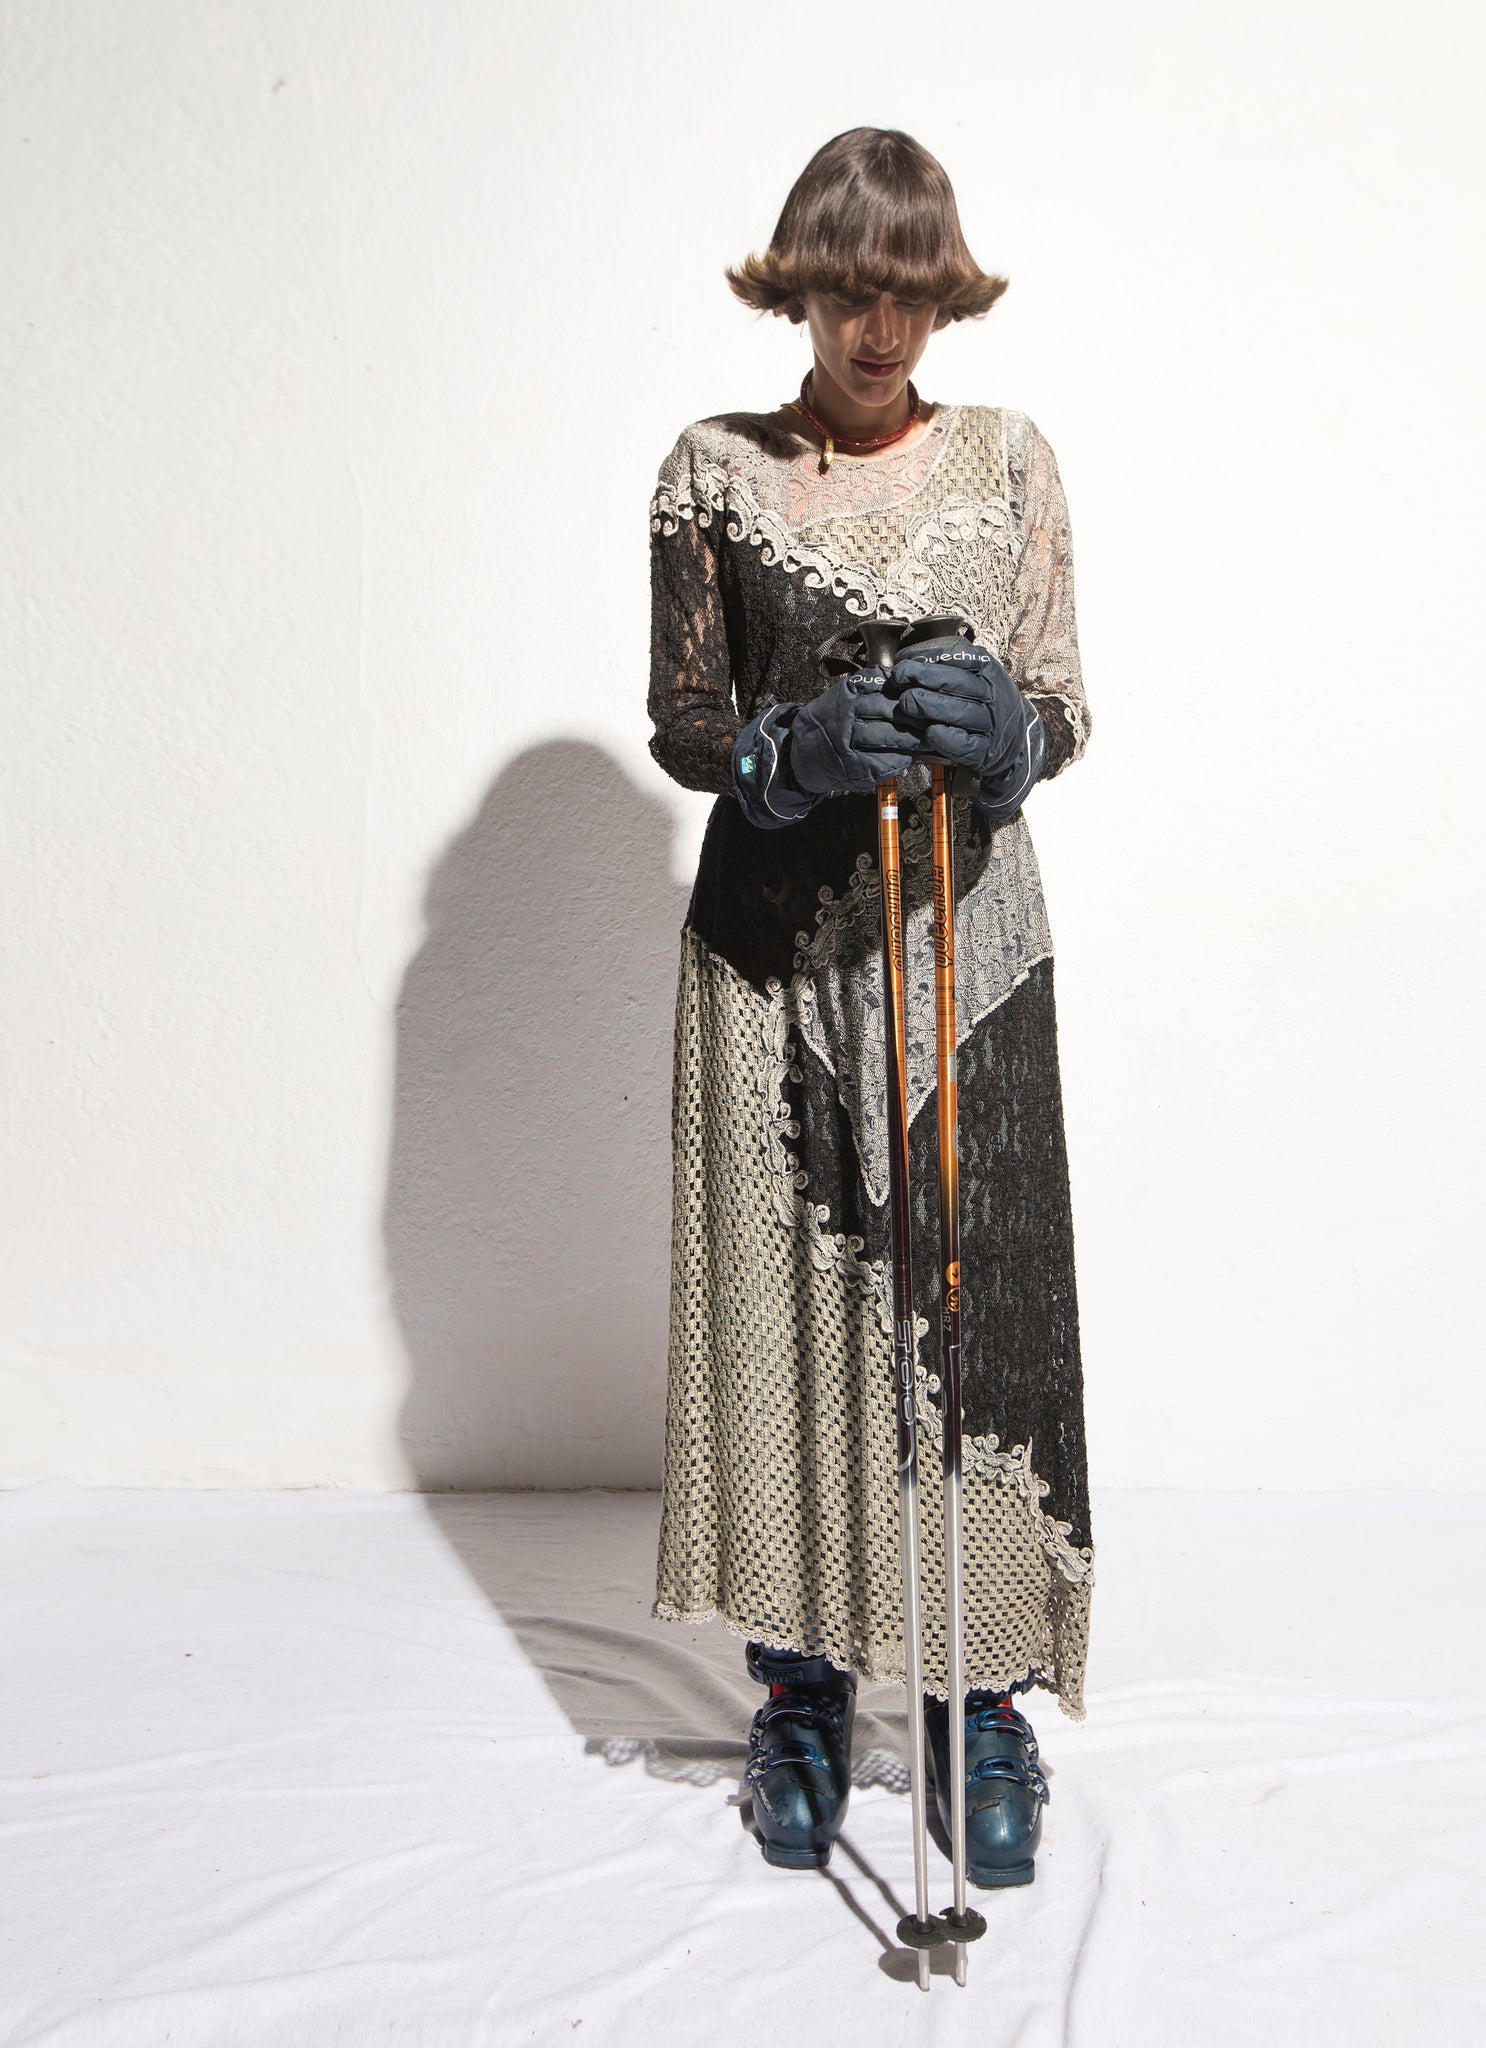 Norma Vintage _guipur & macrame dress